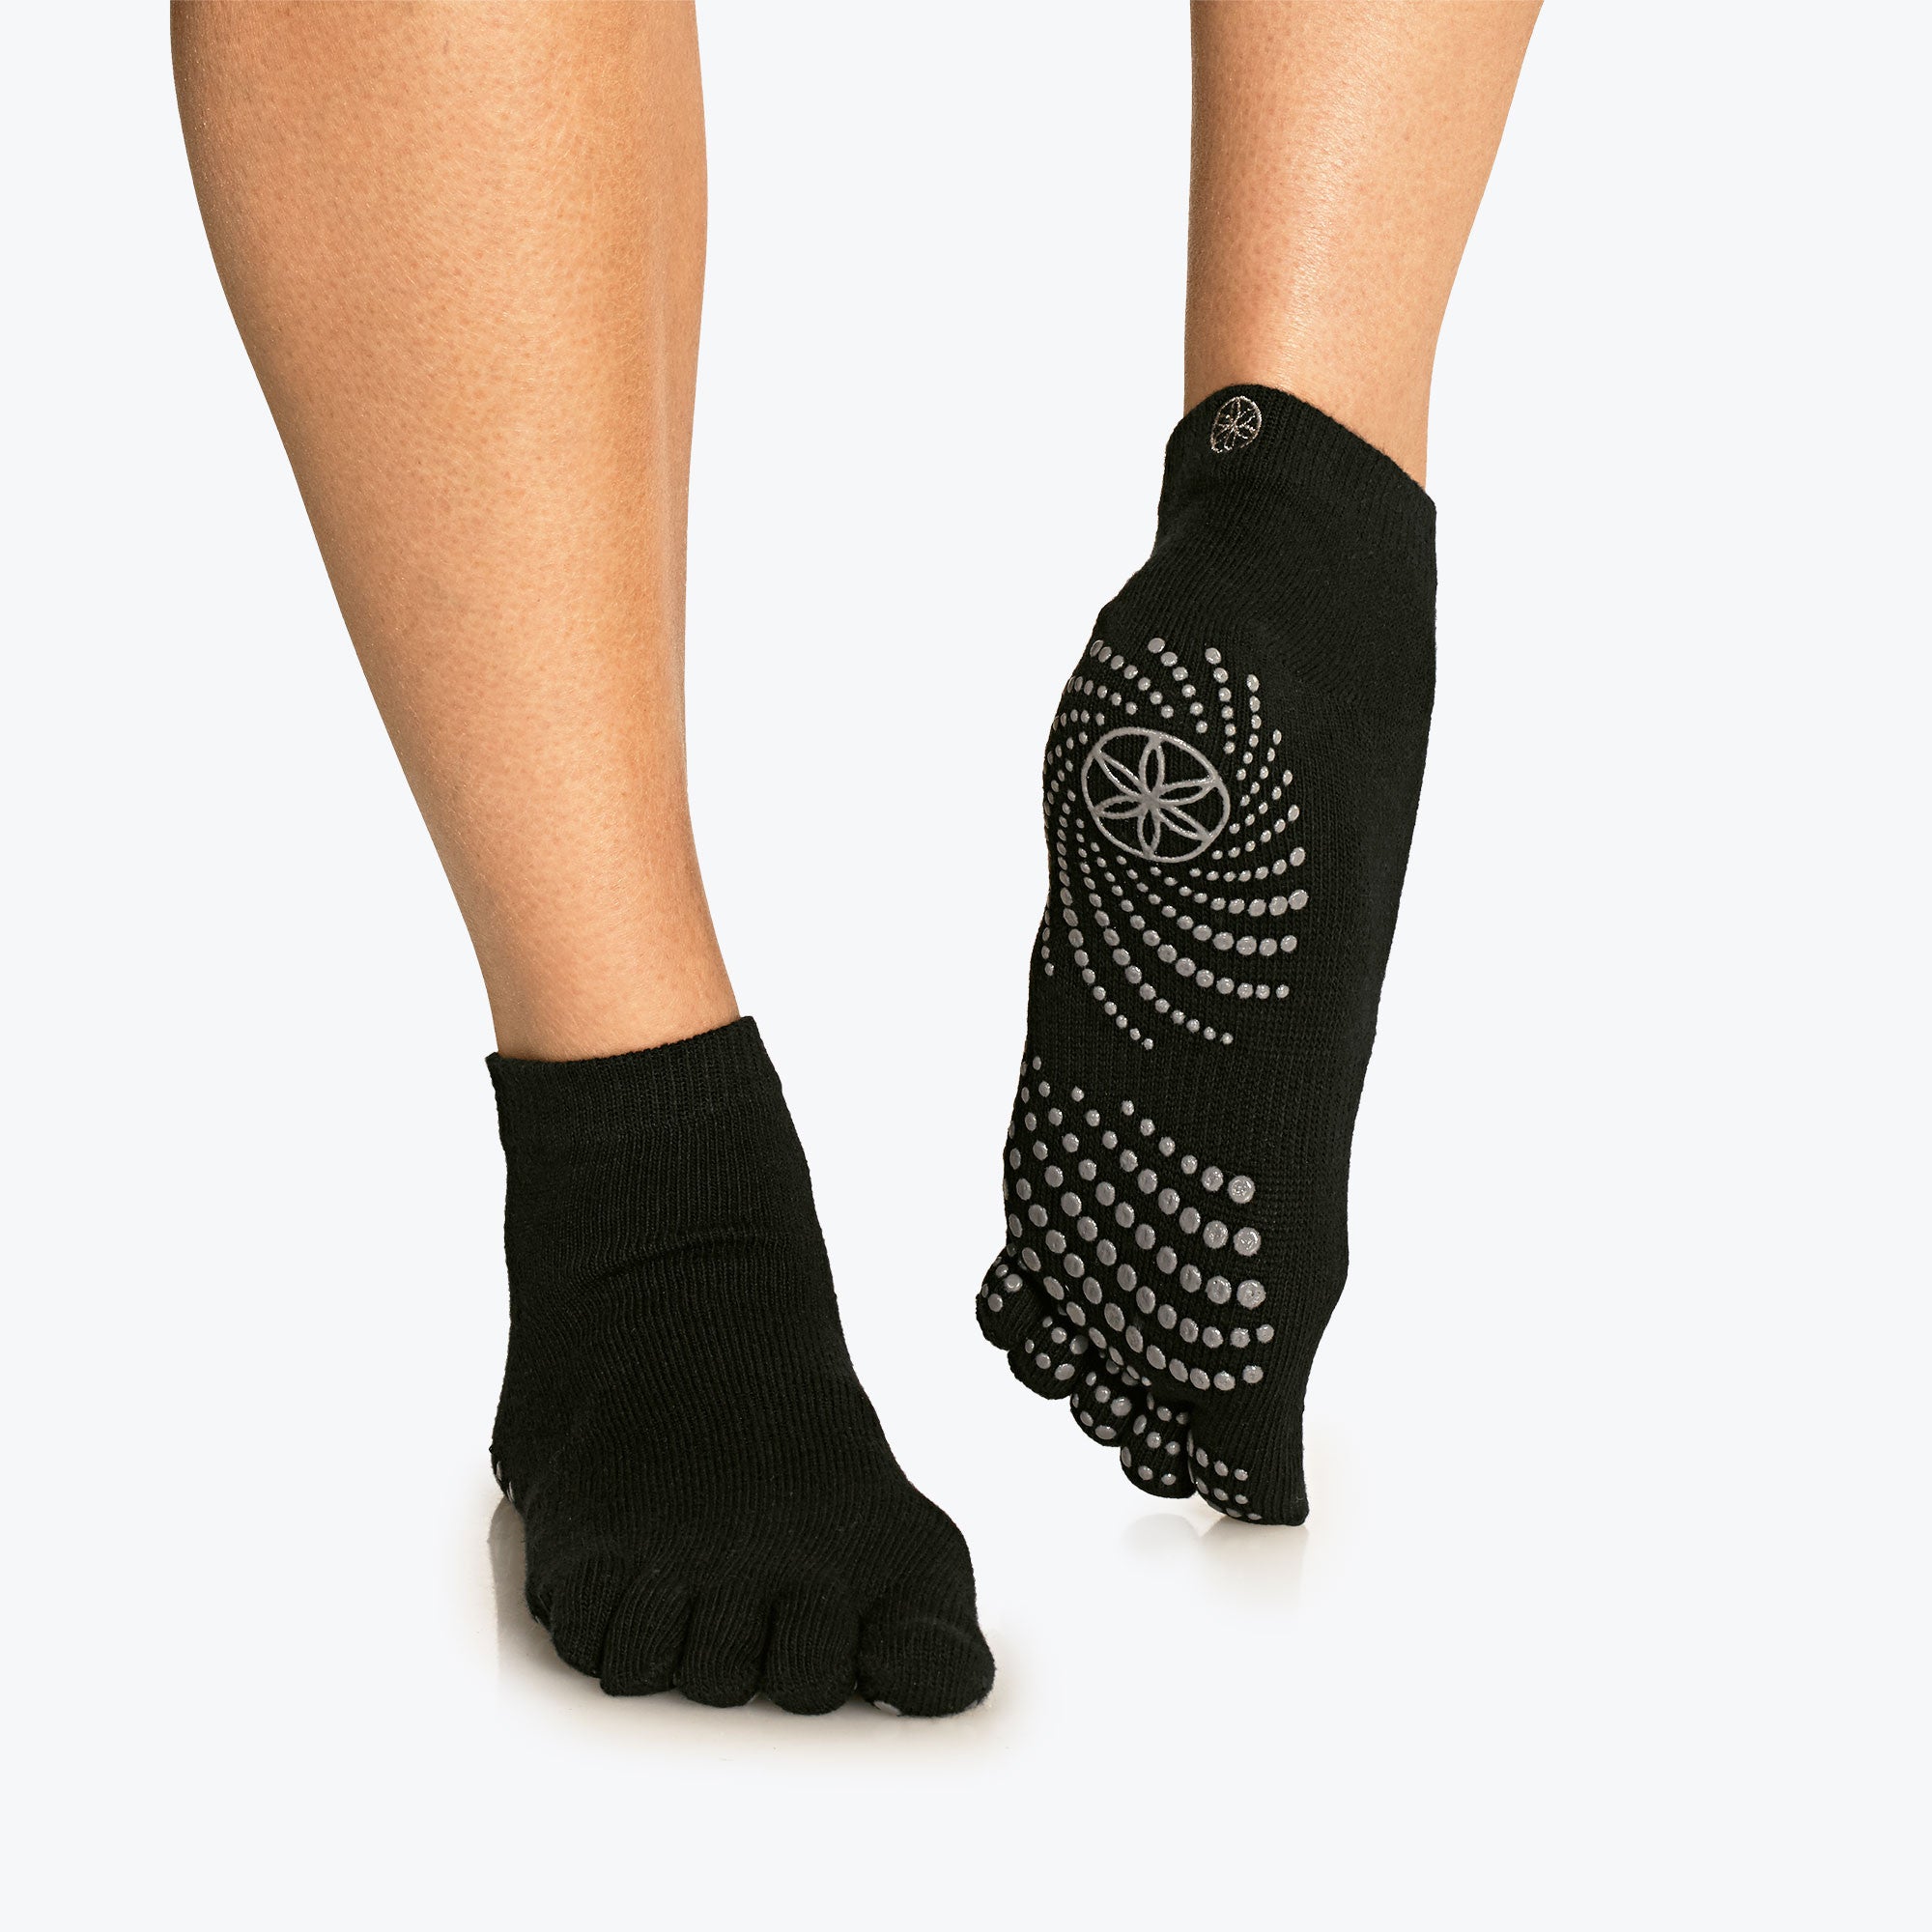 Gaiam Yoga Barre Socks - Non Slip Sticky Toe Grip Nepal